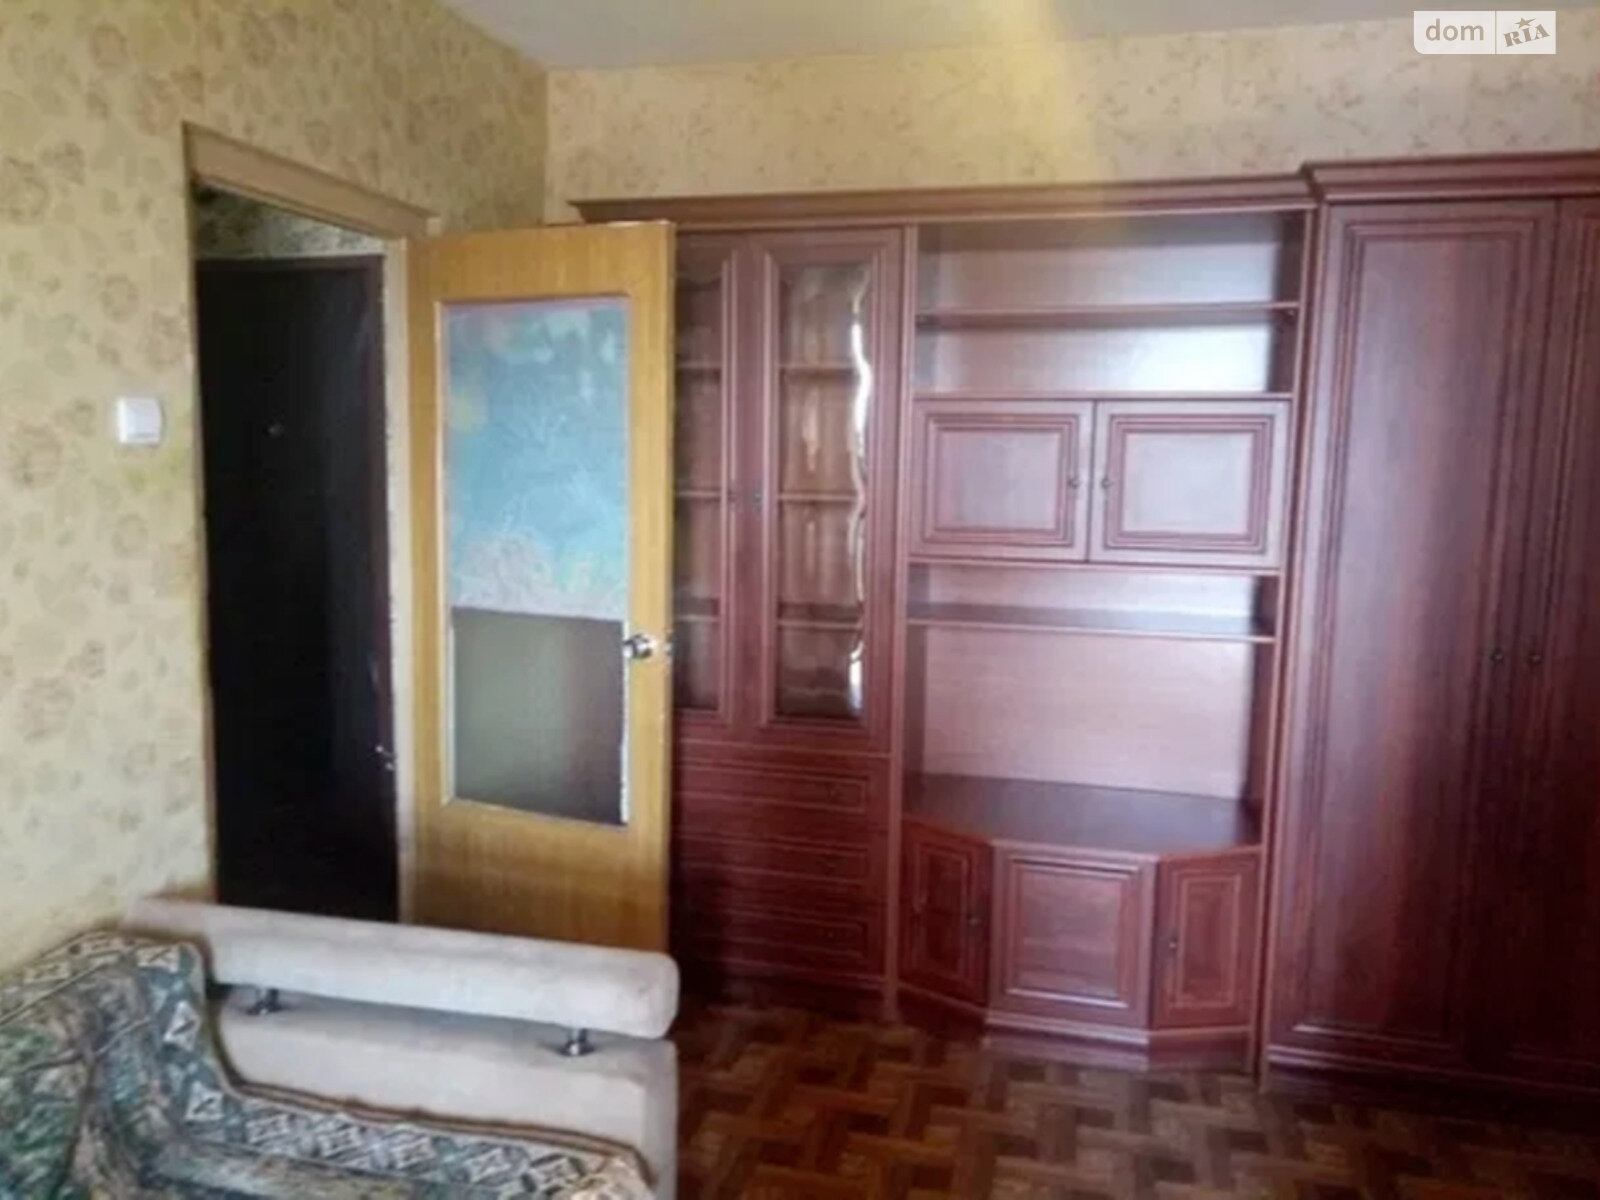 Продажа однокомнатной квартиры в Одессе, на ул. Академика Королева 61/1, район Таирова фото 1